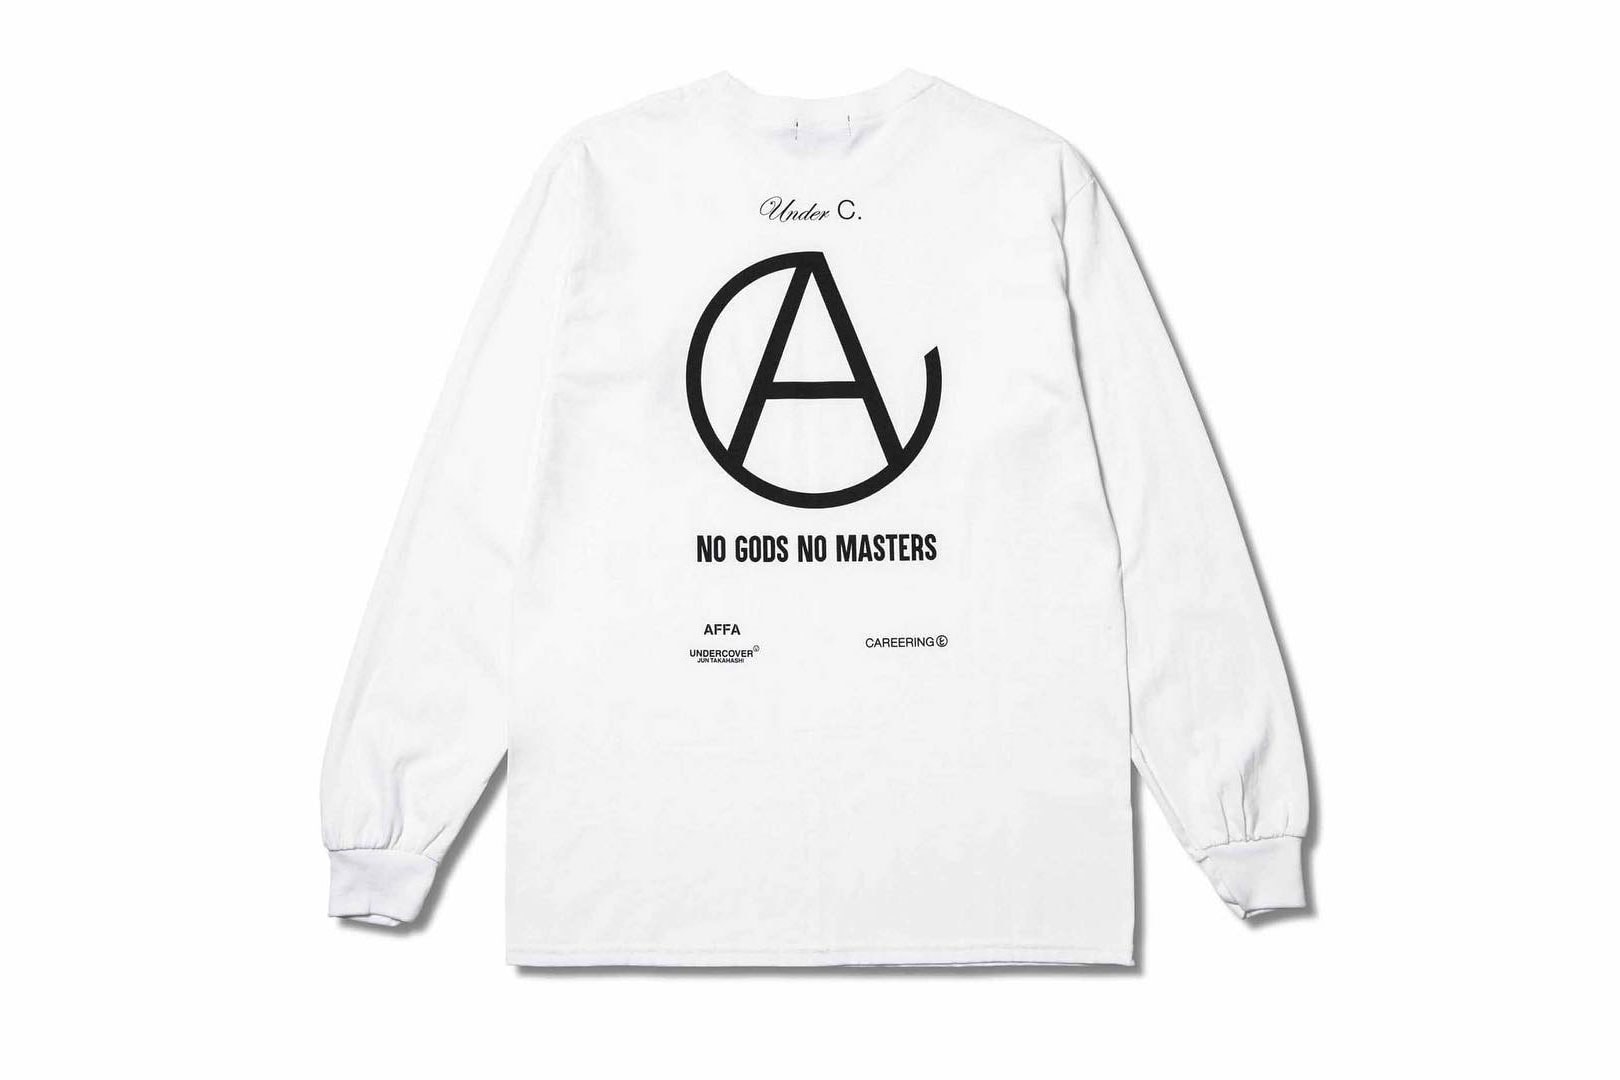 AFFA CAREERING UNDERCOVER Capsule Release Anarchy Forever Forever Anarchy Black White T shirt long sleeve Jun Takahashi Hiroshi Fujiwara Under C